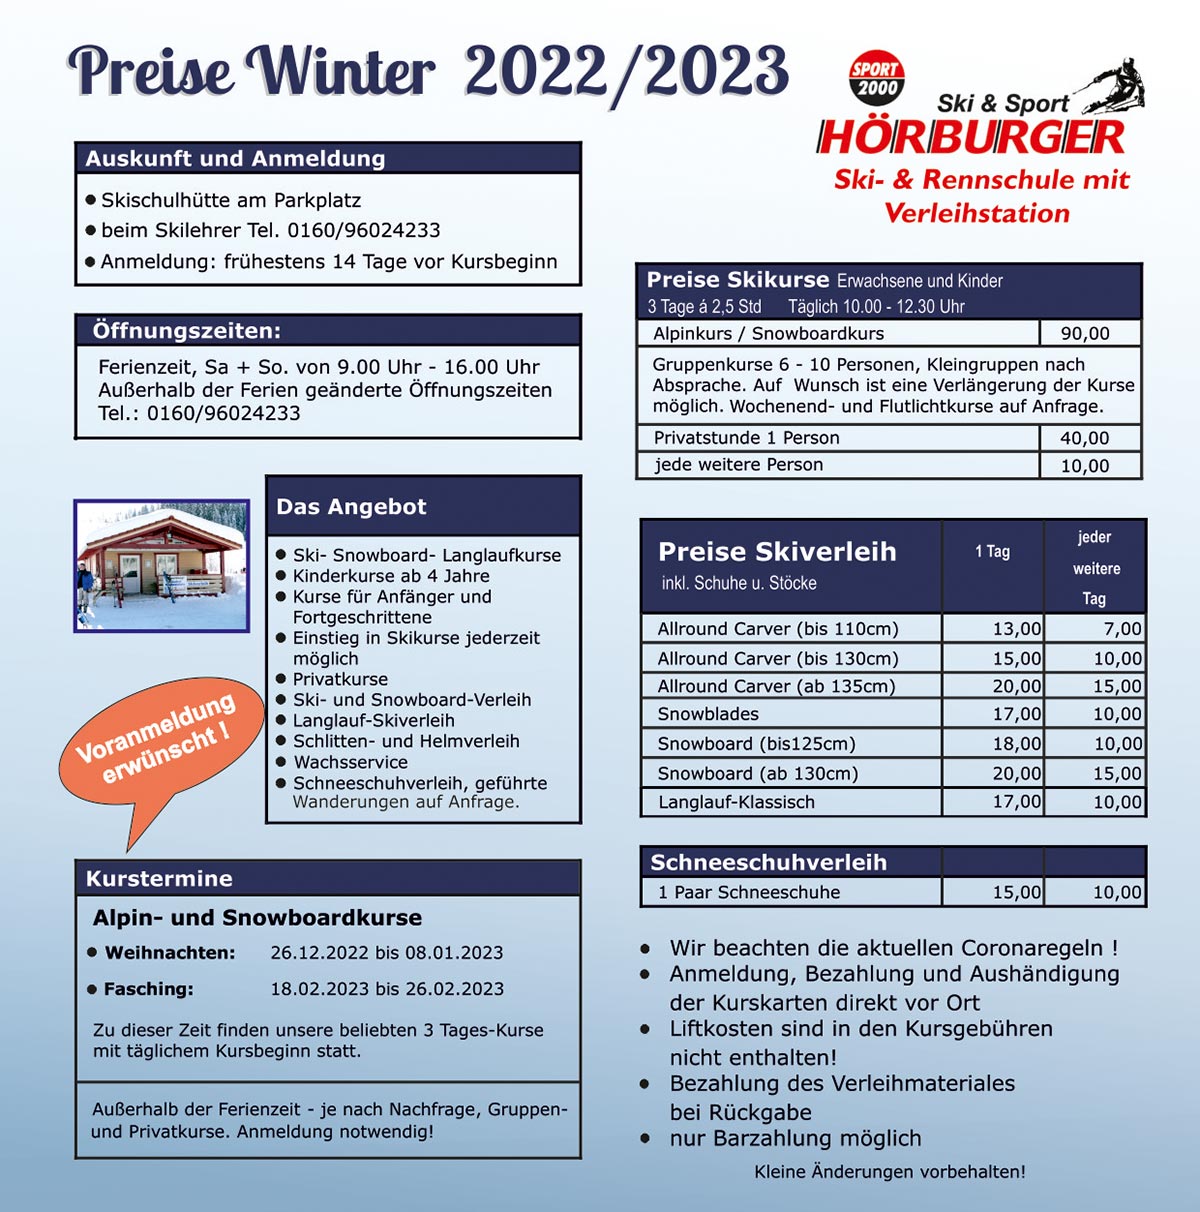 Preise Winter 2022 / 2023